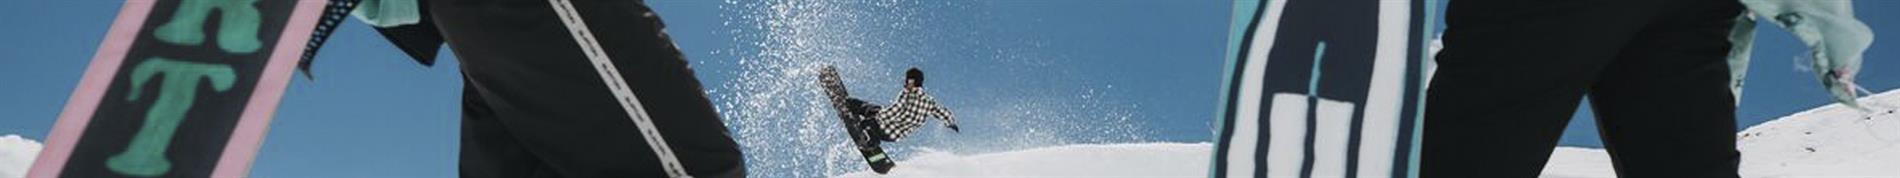 K2 Snowboarding High-Performance Snowboards for Kids 